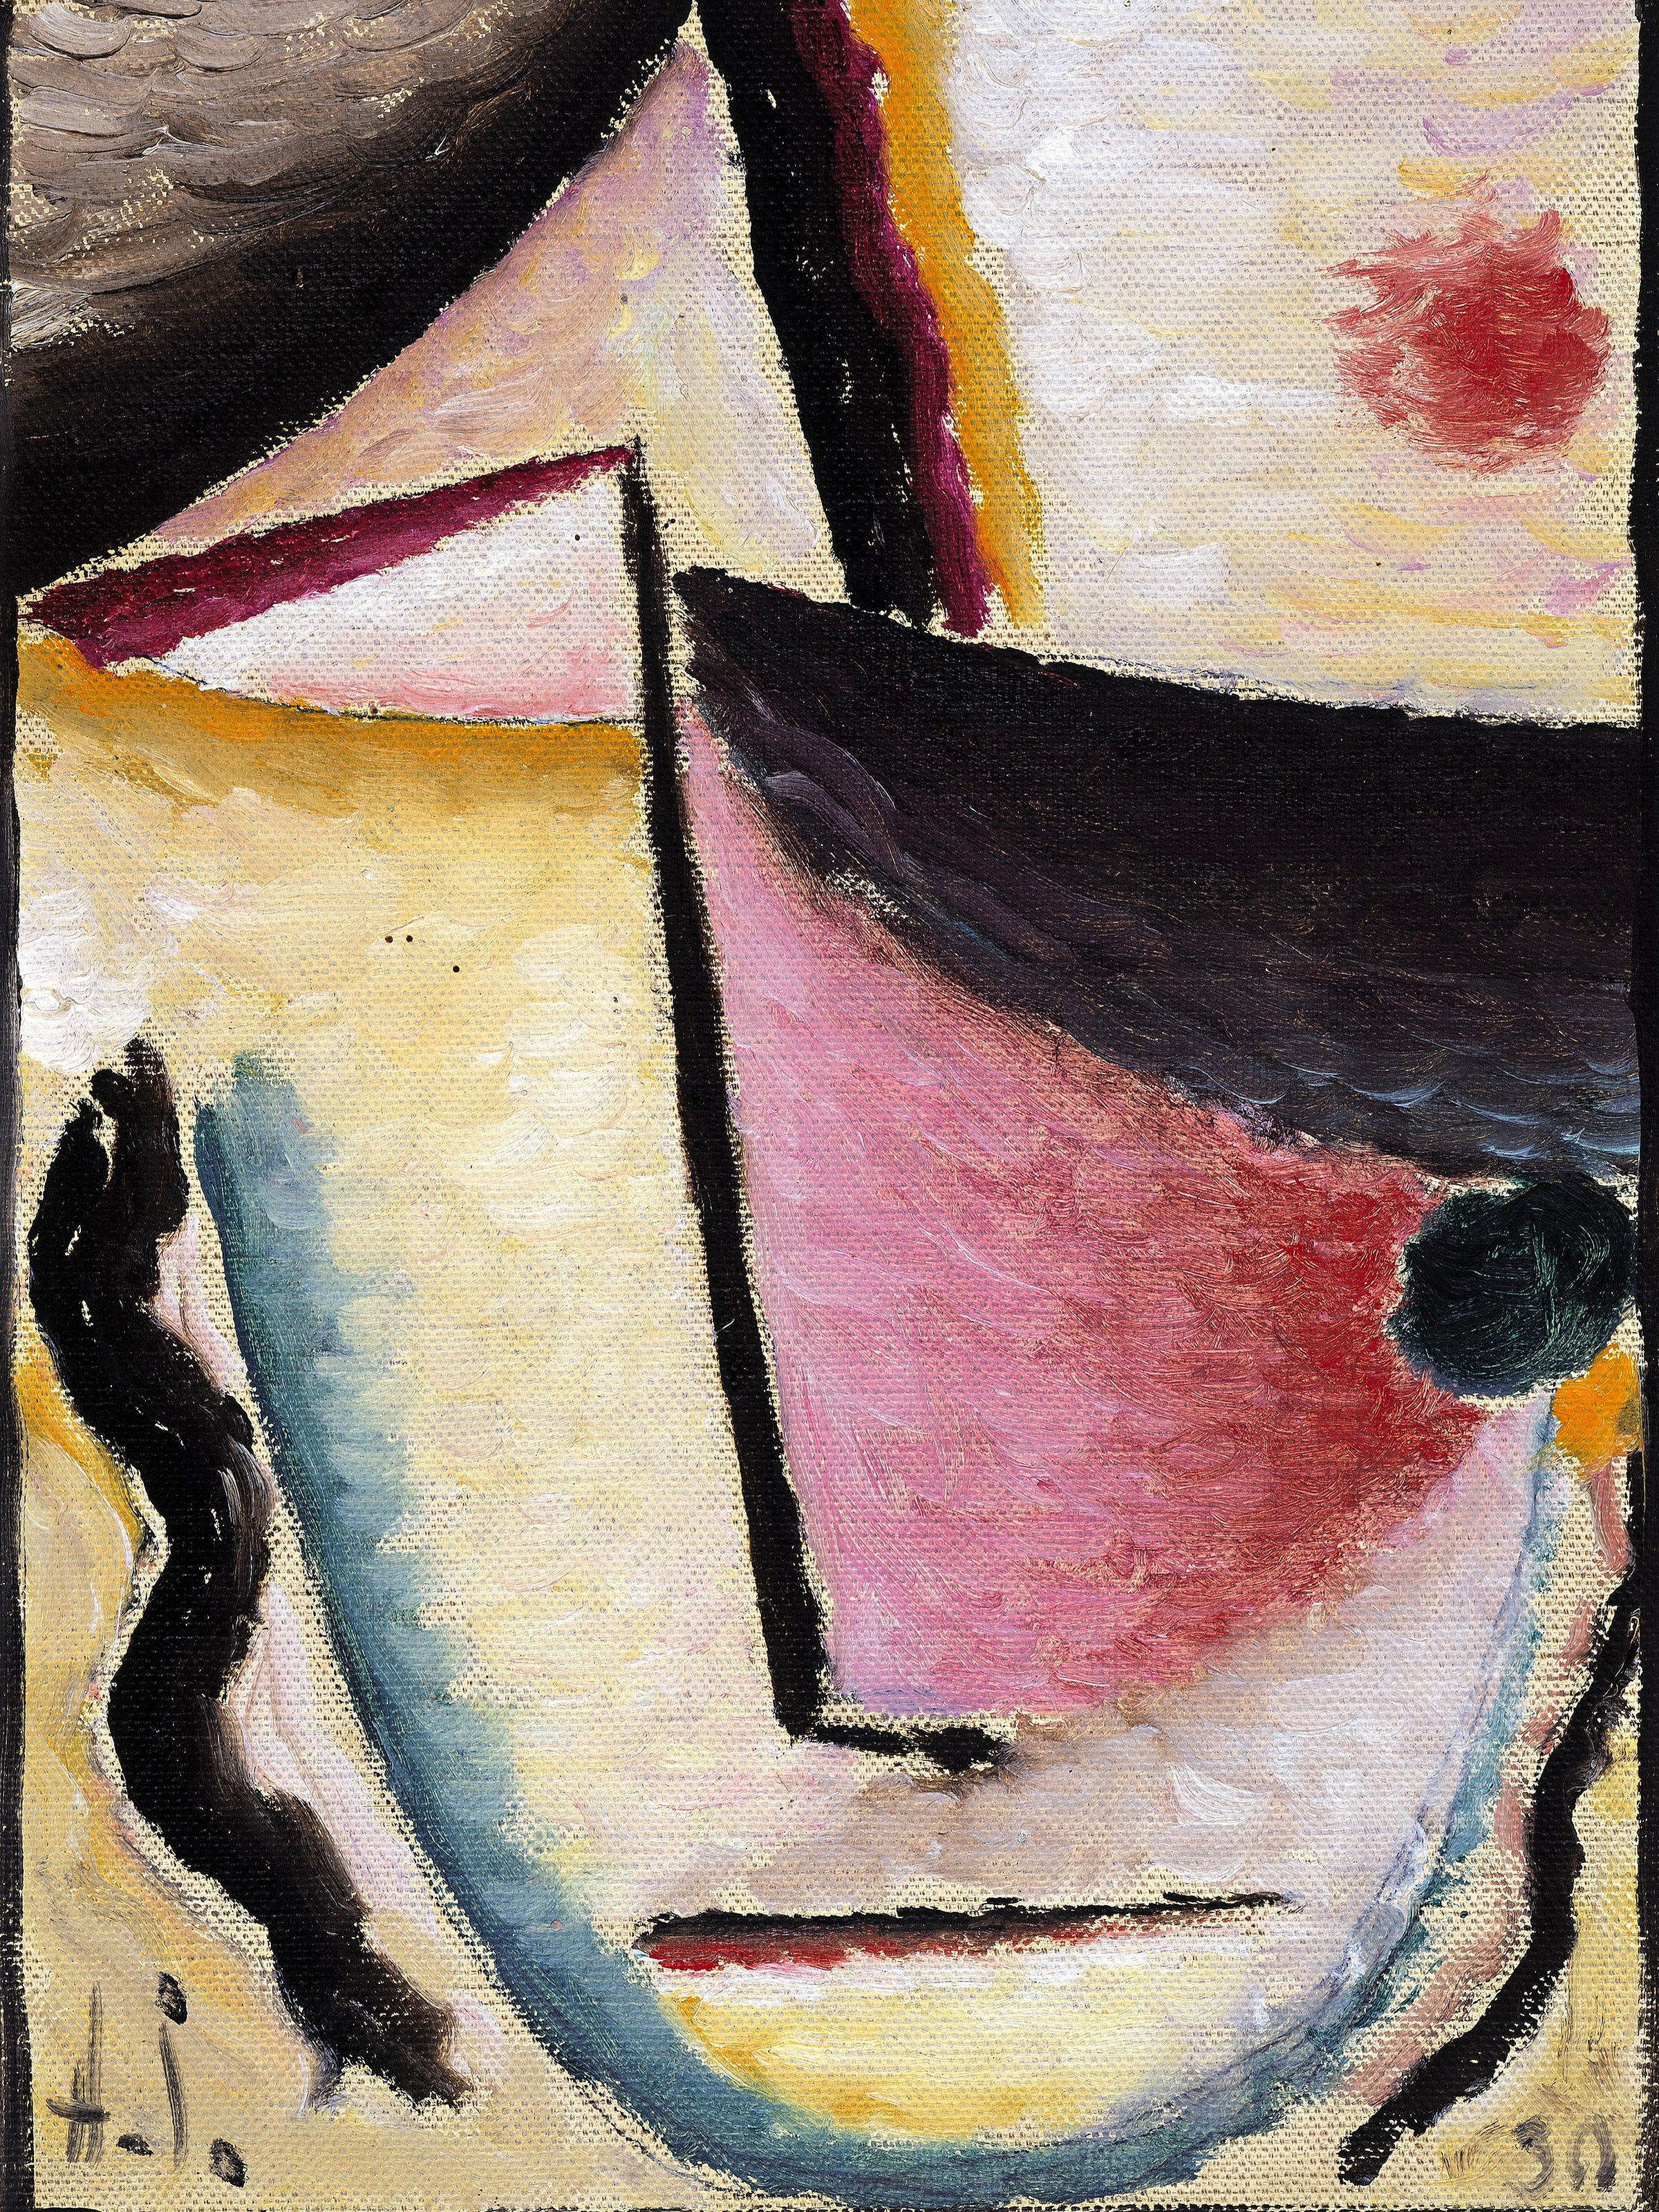 Alexej von Jawlensky, Abstrakter Kopf: Schräge Augen (Abstract Head, Slanted Eyes), 1930. Courtesy of Galerie Thomas.